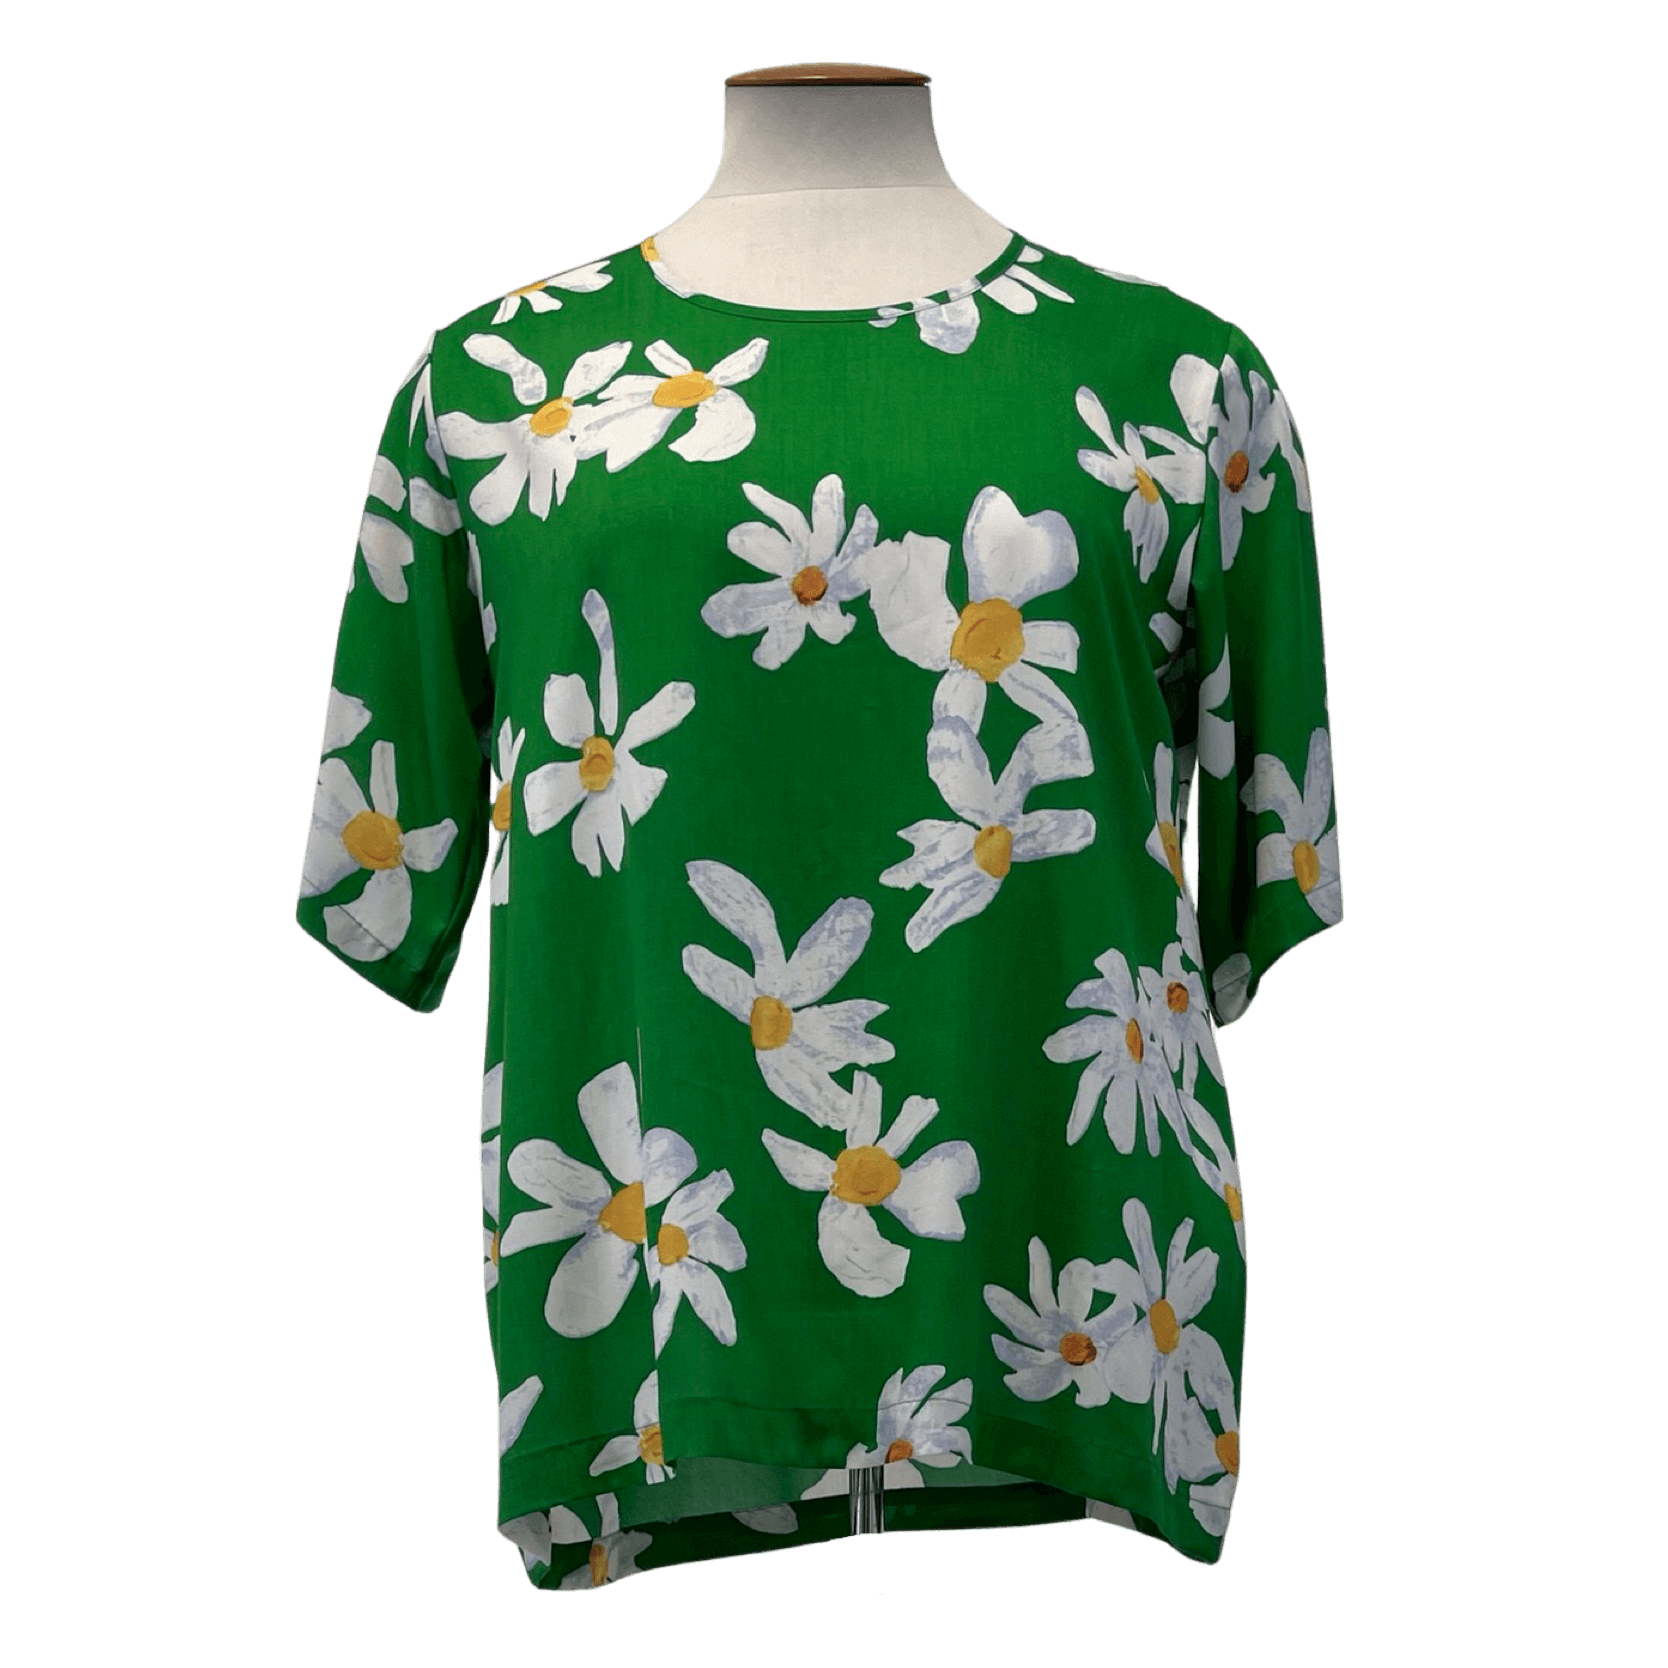 Bloom Clothing NZ,FRESH DAISY TOP -Grass Green,$189.00,